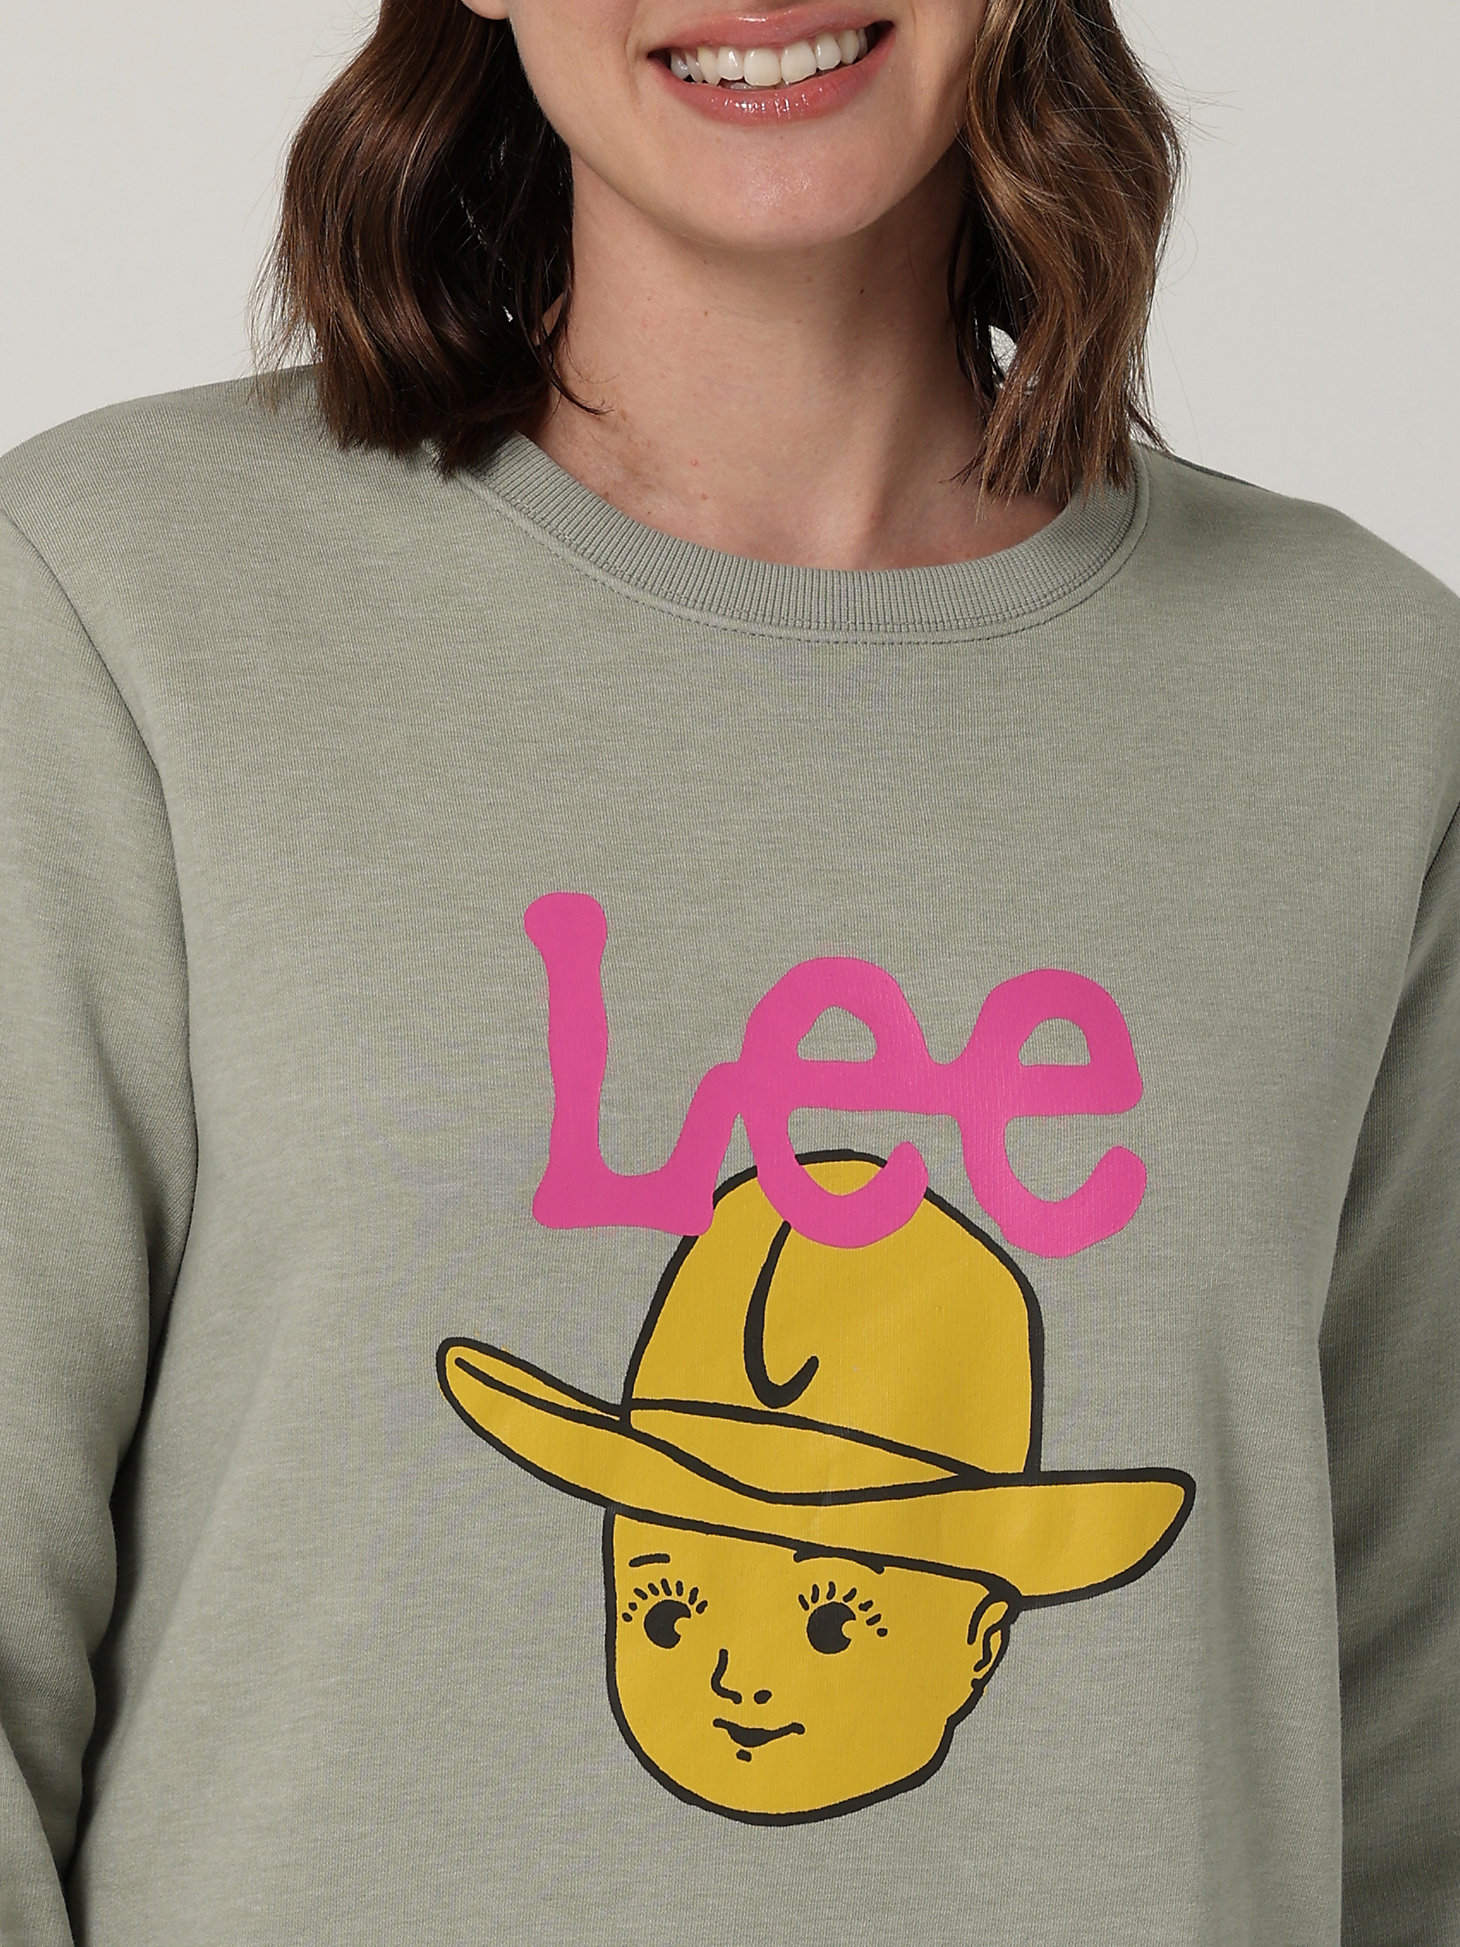 Women's Legendary Buddy Lee Crew Neck Sweatshirt in Seaglass alternative view 2